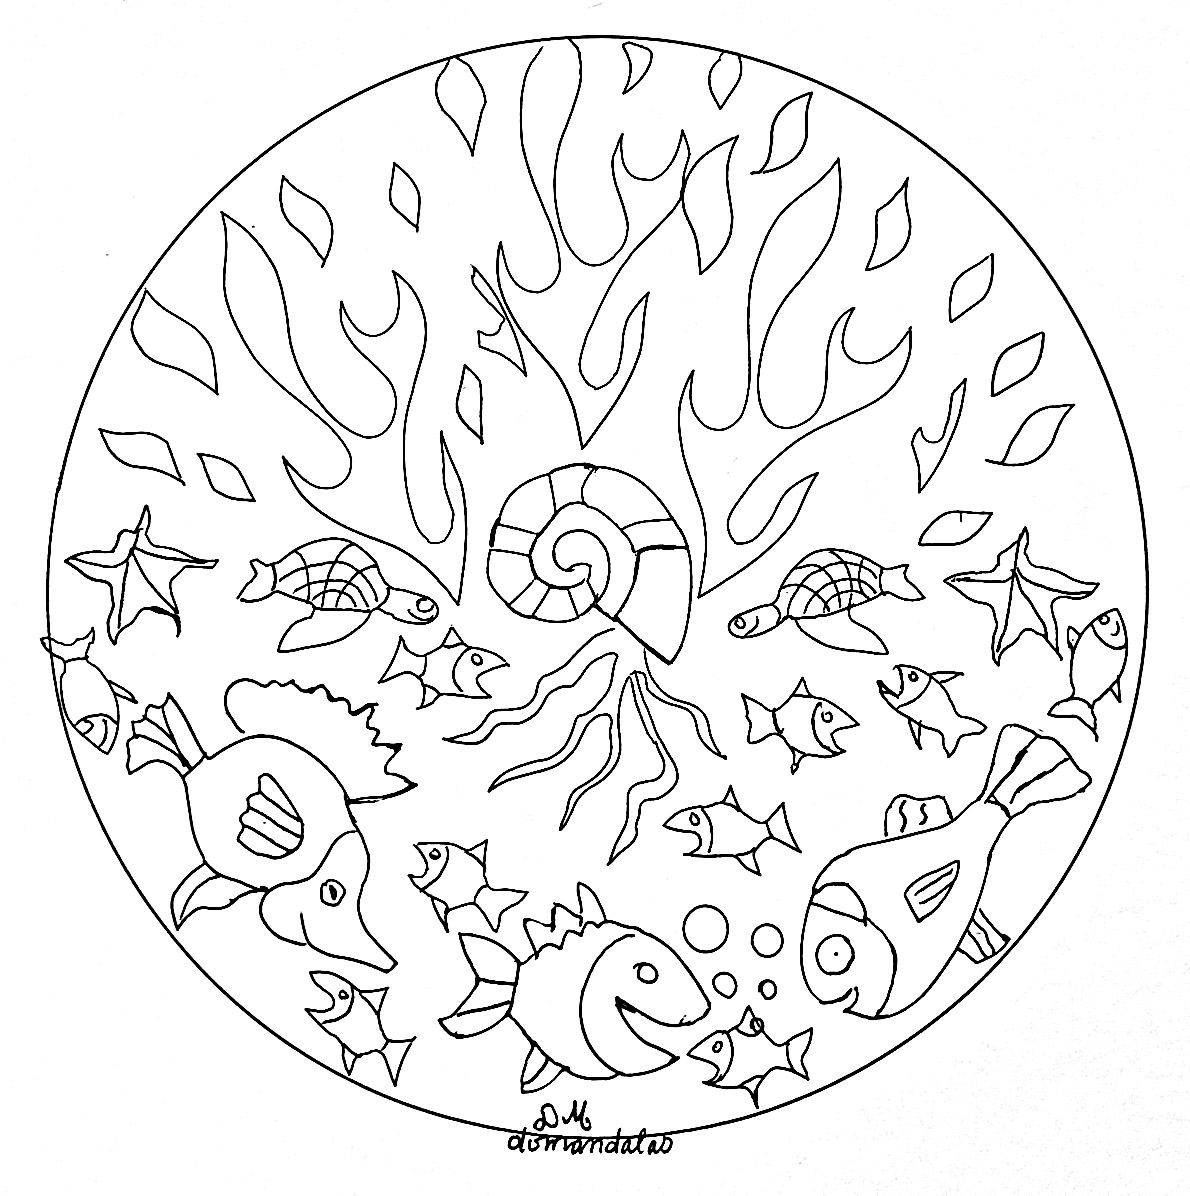 Mandala domandalas seabed, Artist : Domandalas